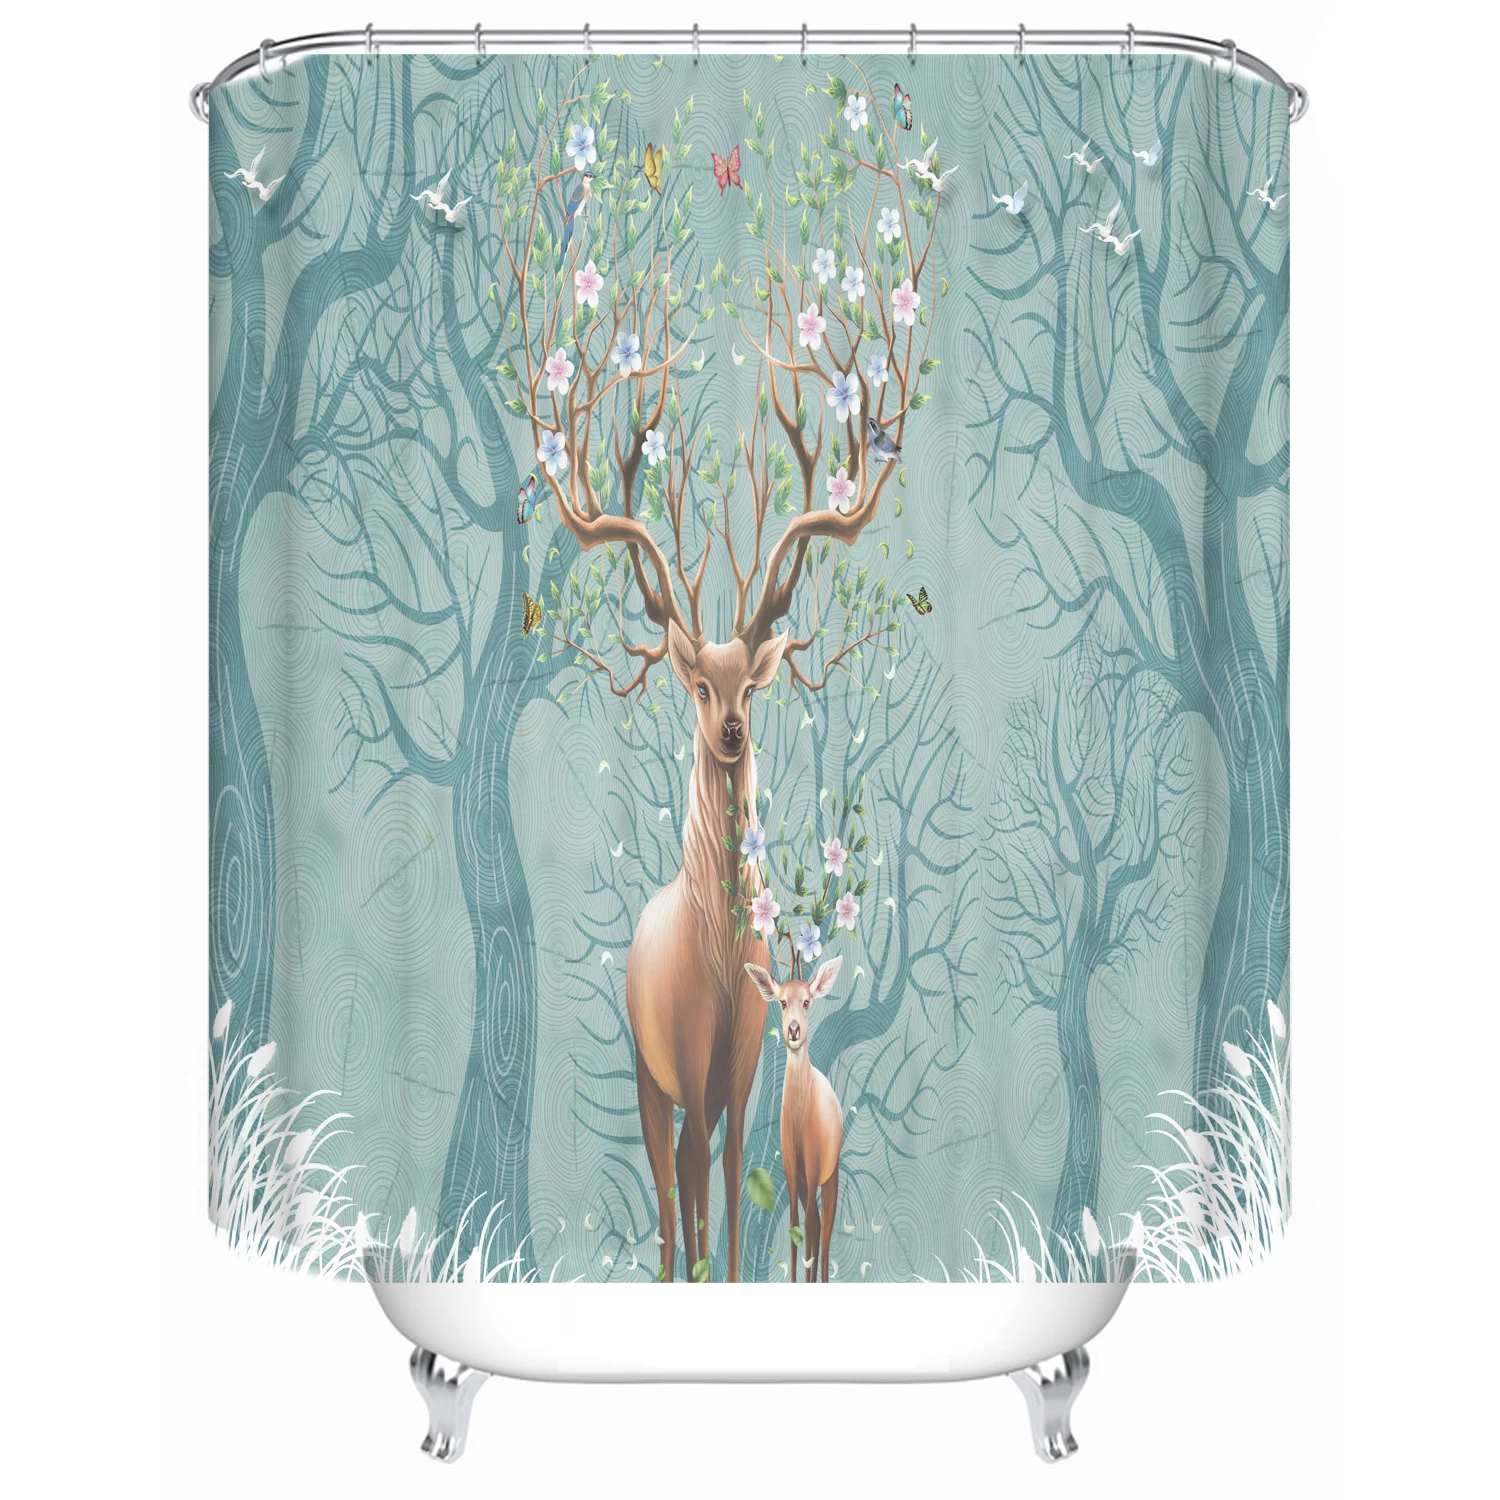 

Bathroom shower curtain partition bathtub waterproof shower curtain forest flowers elk custom printed shower curtain, Picture